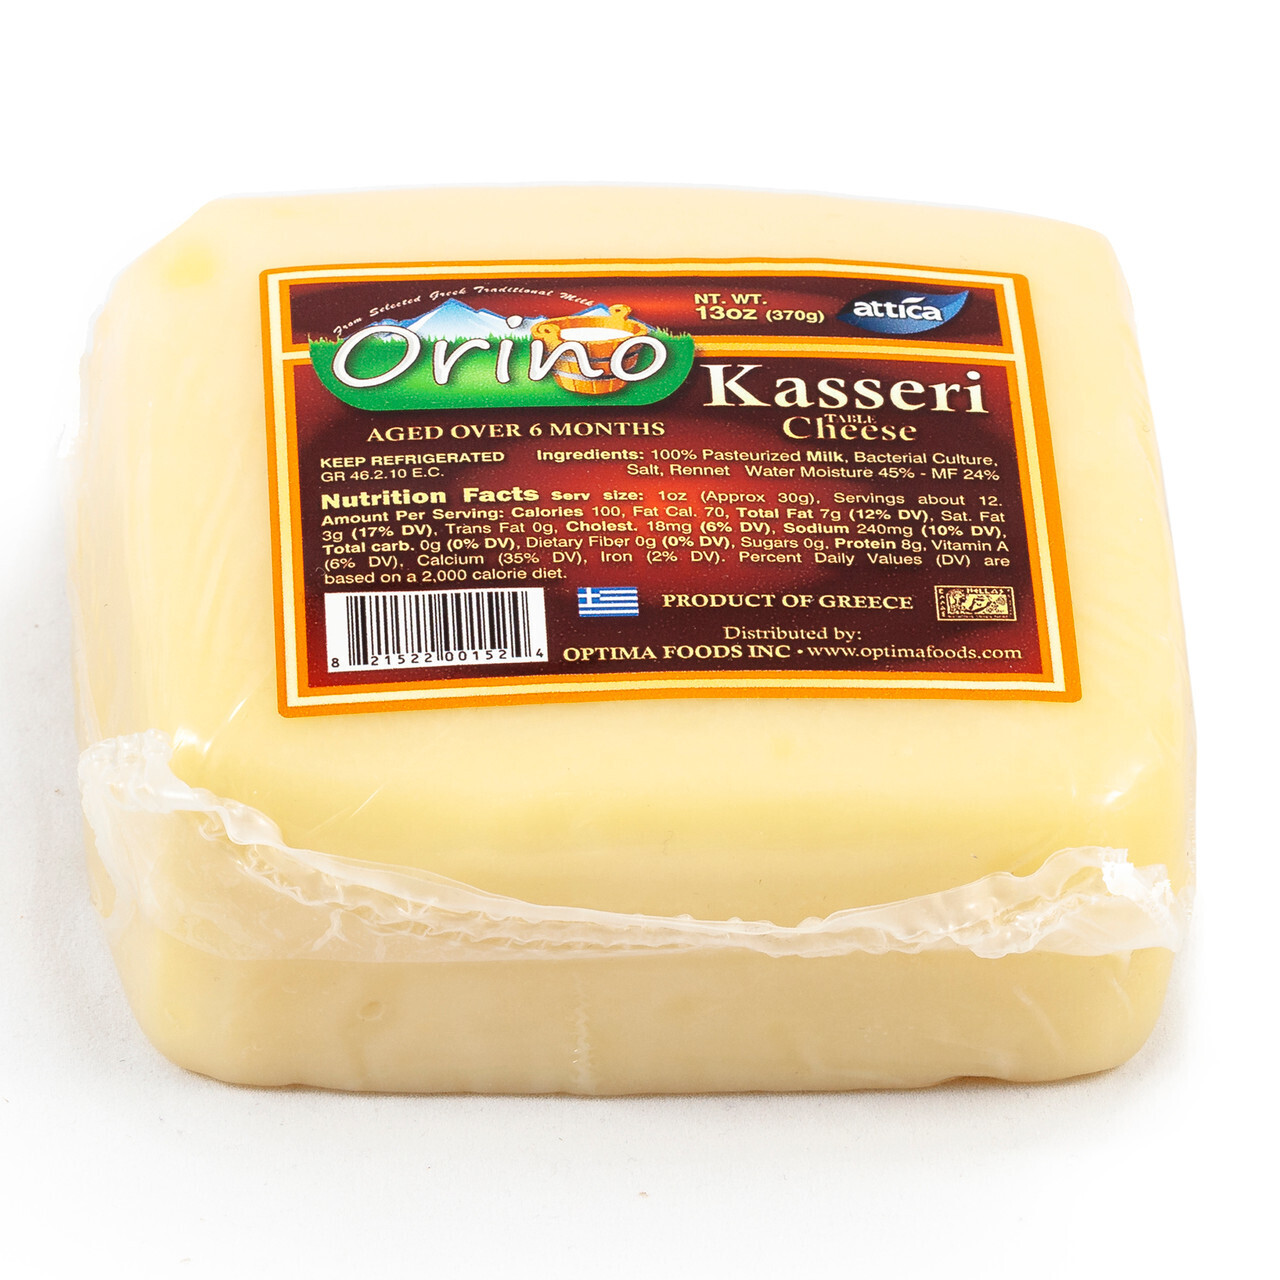 Orino Kasseri Greek Cheese Chunk 13 oz (370g)